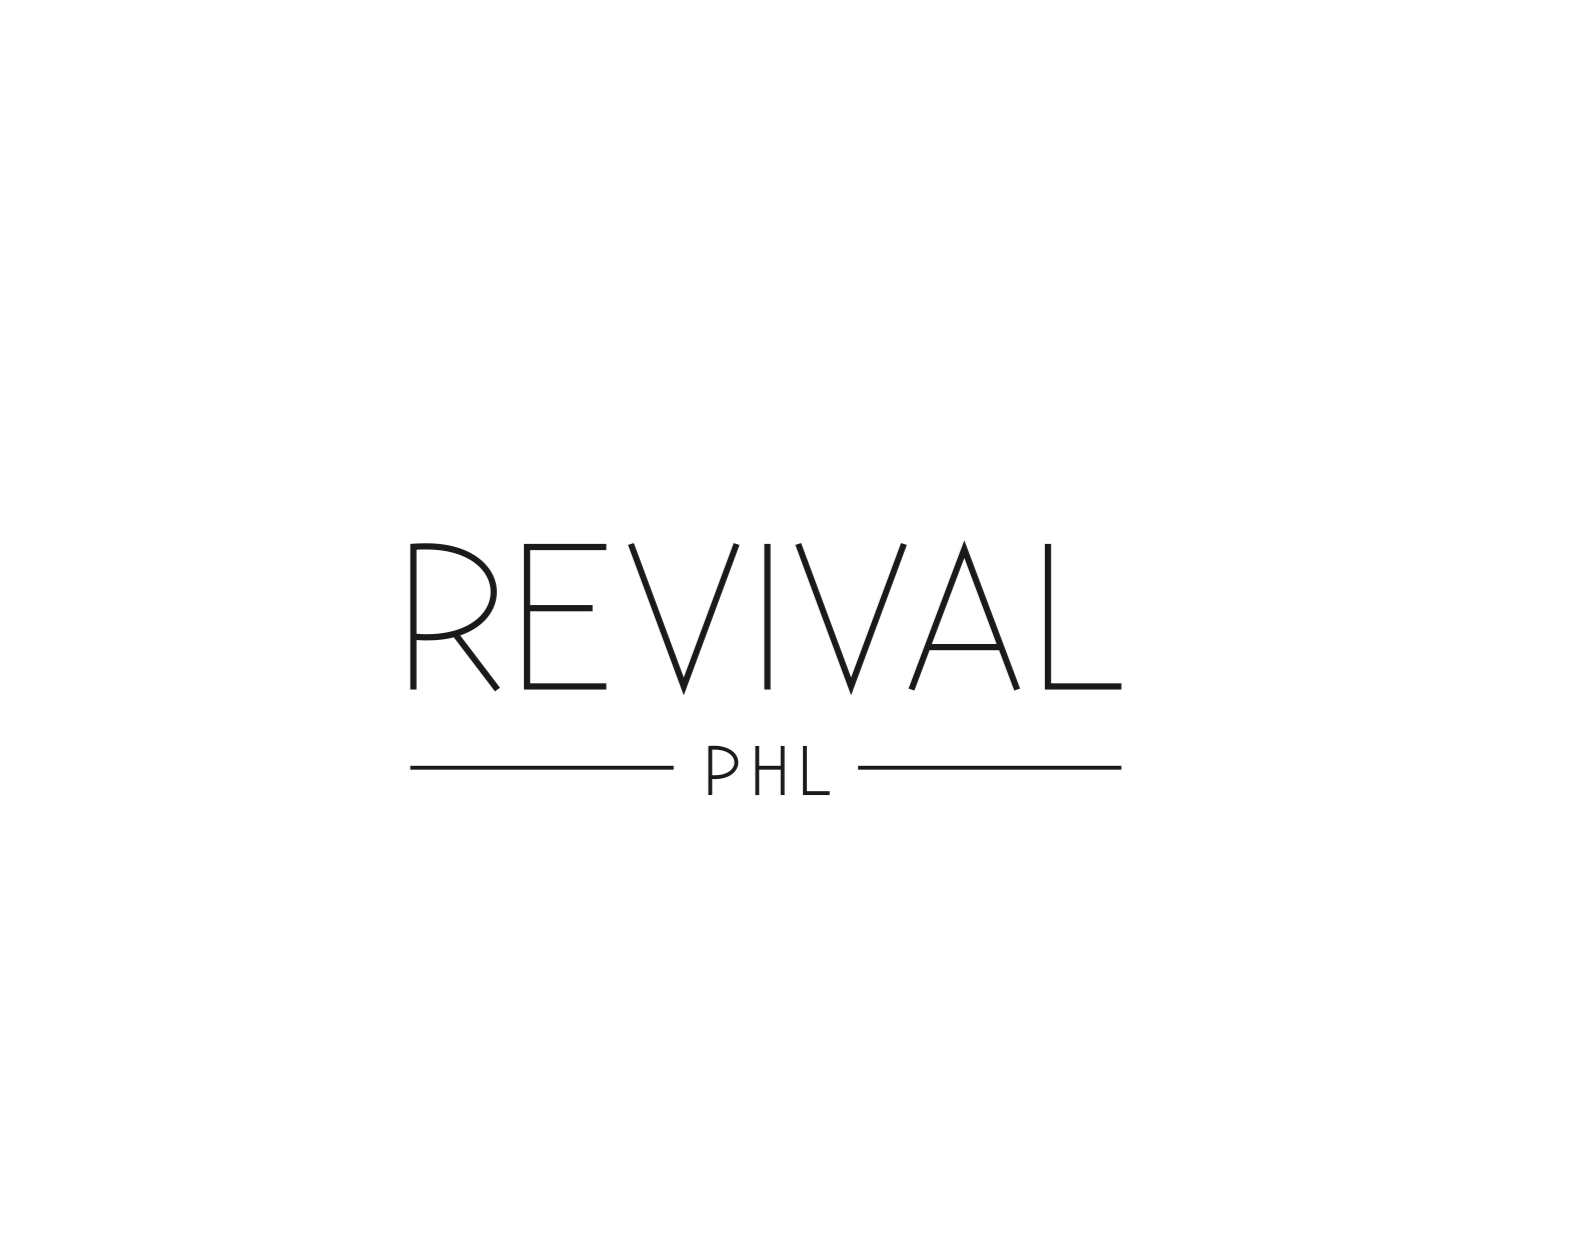 Revival PHL  eGift Card